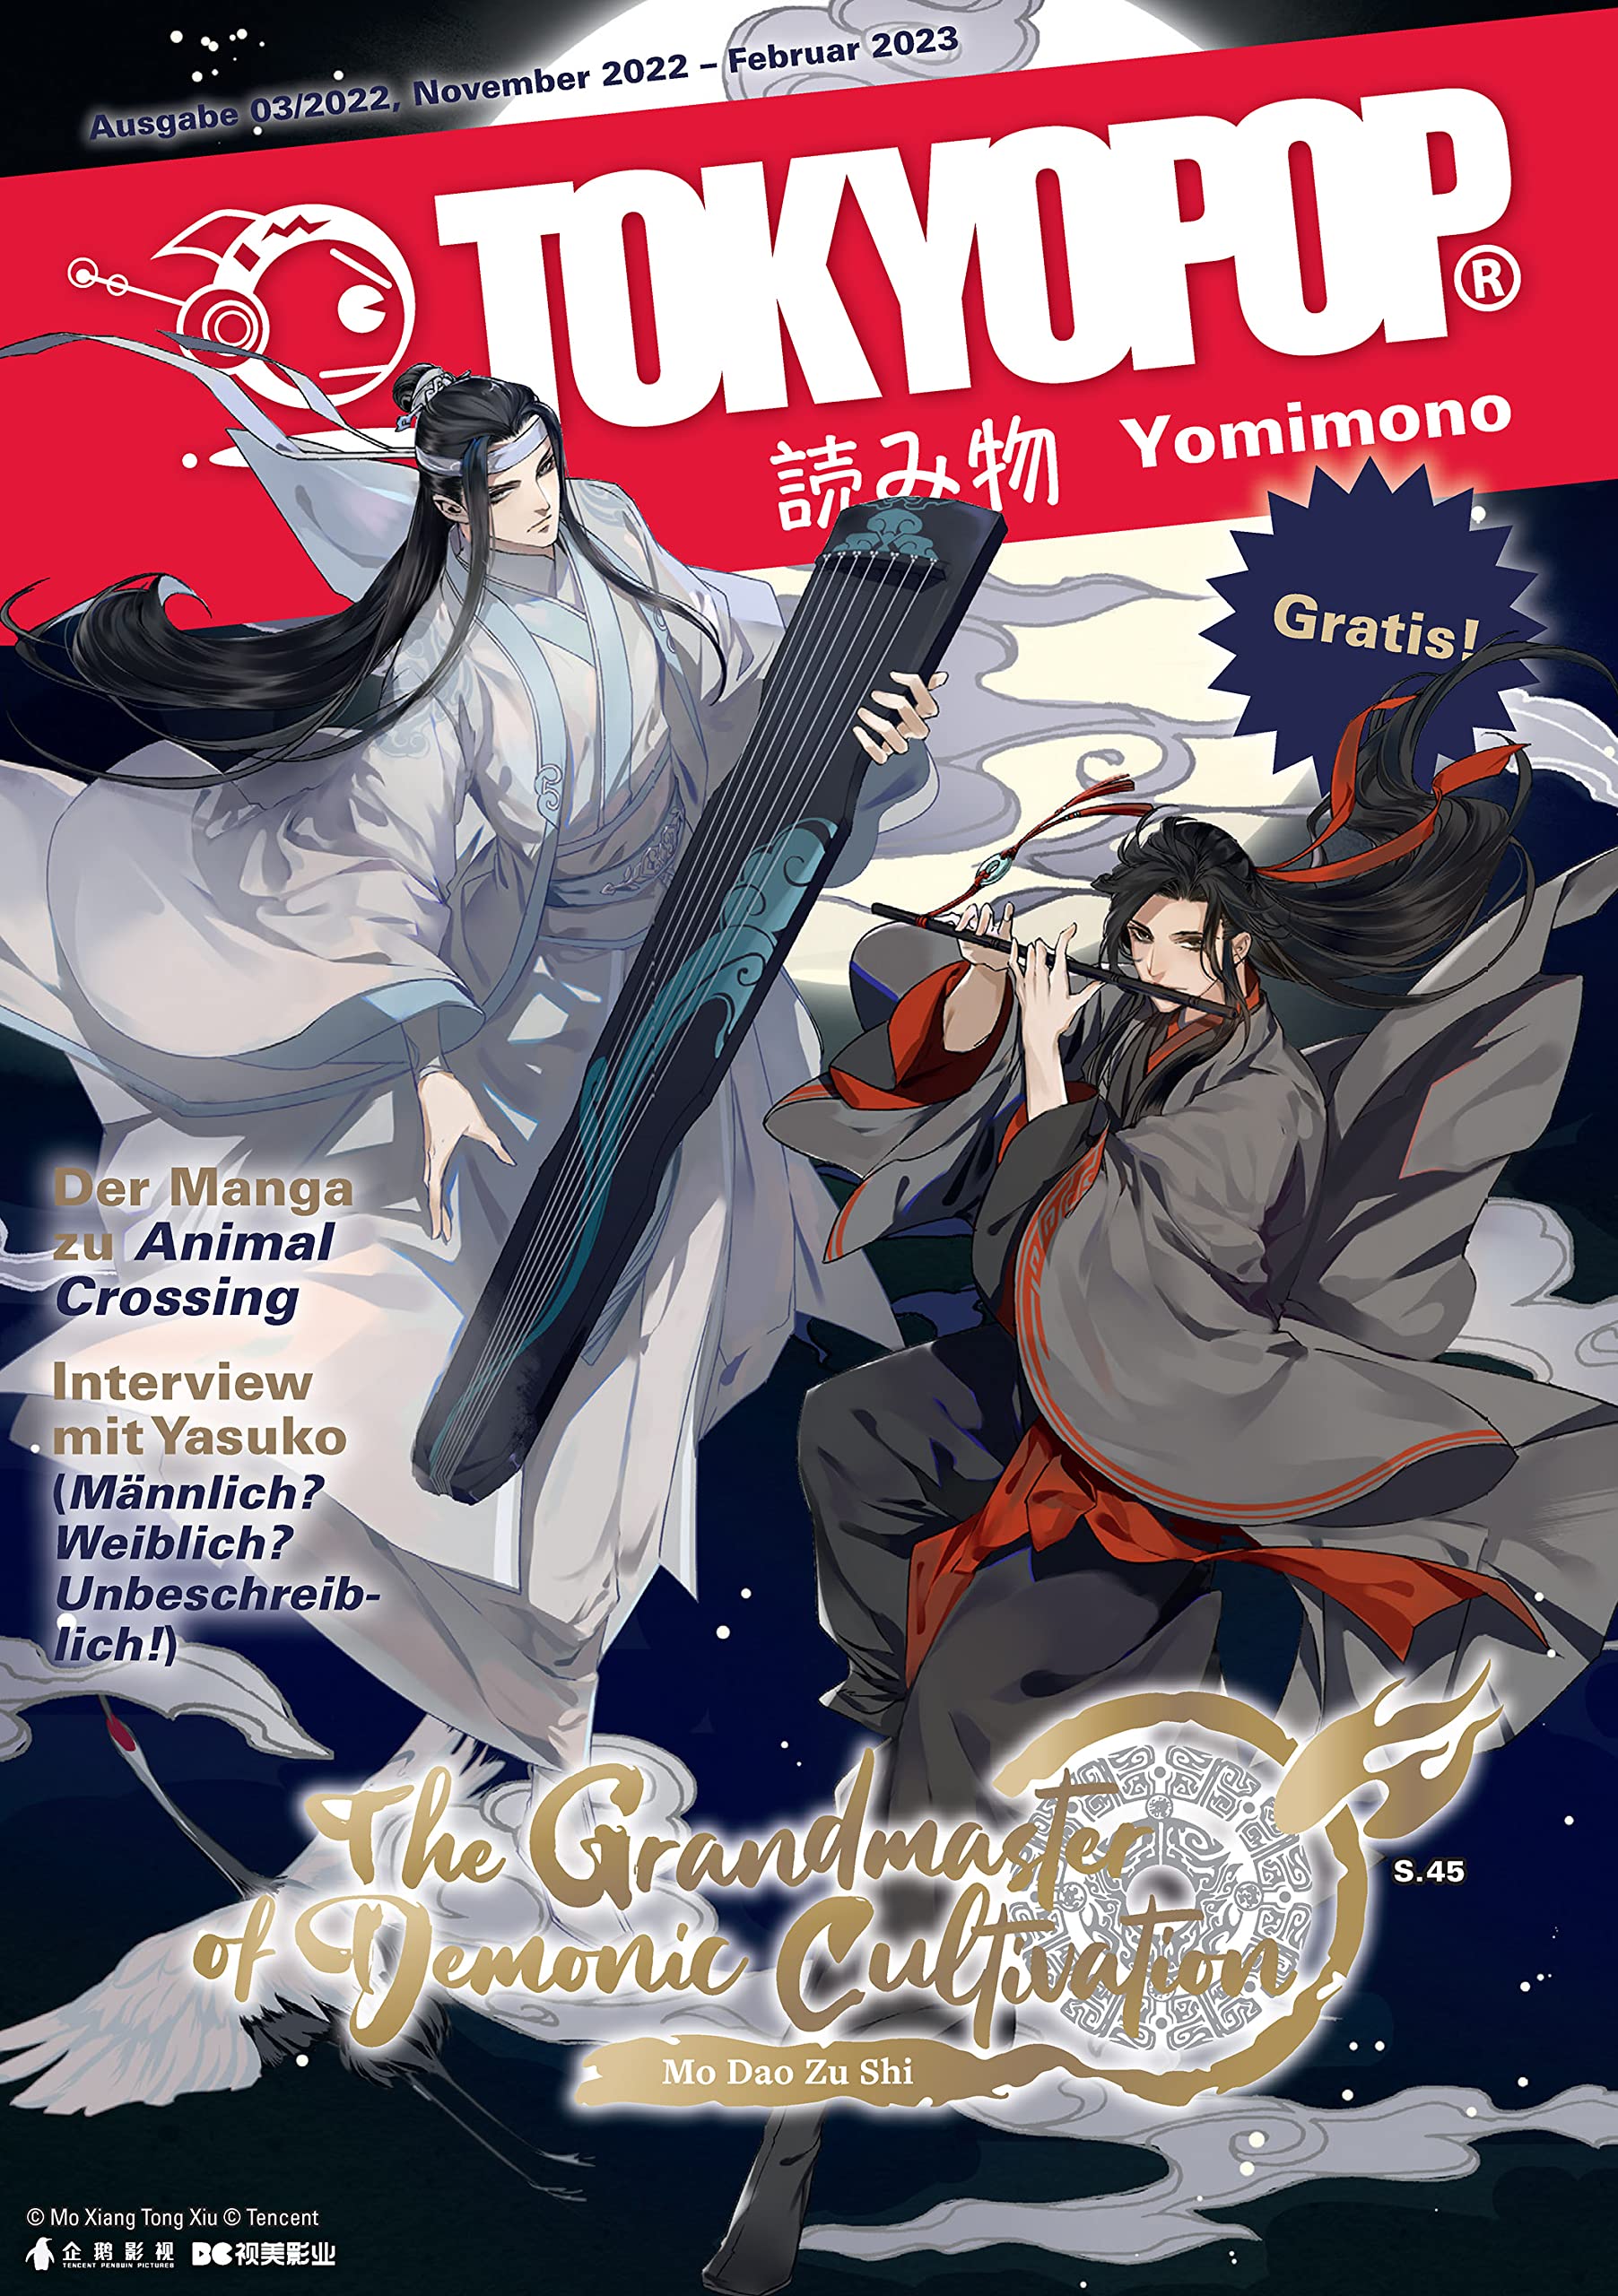 TOKYOPOP Yomimono 13: November 2022 bis Februar 2023 (German Edition)